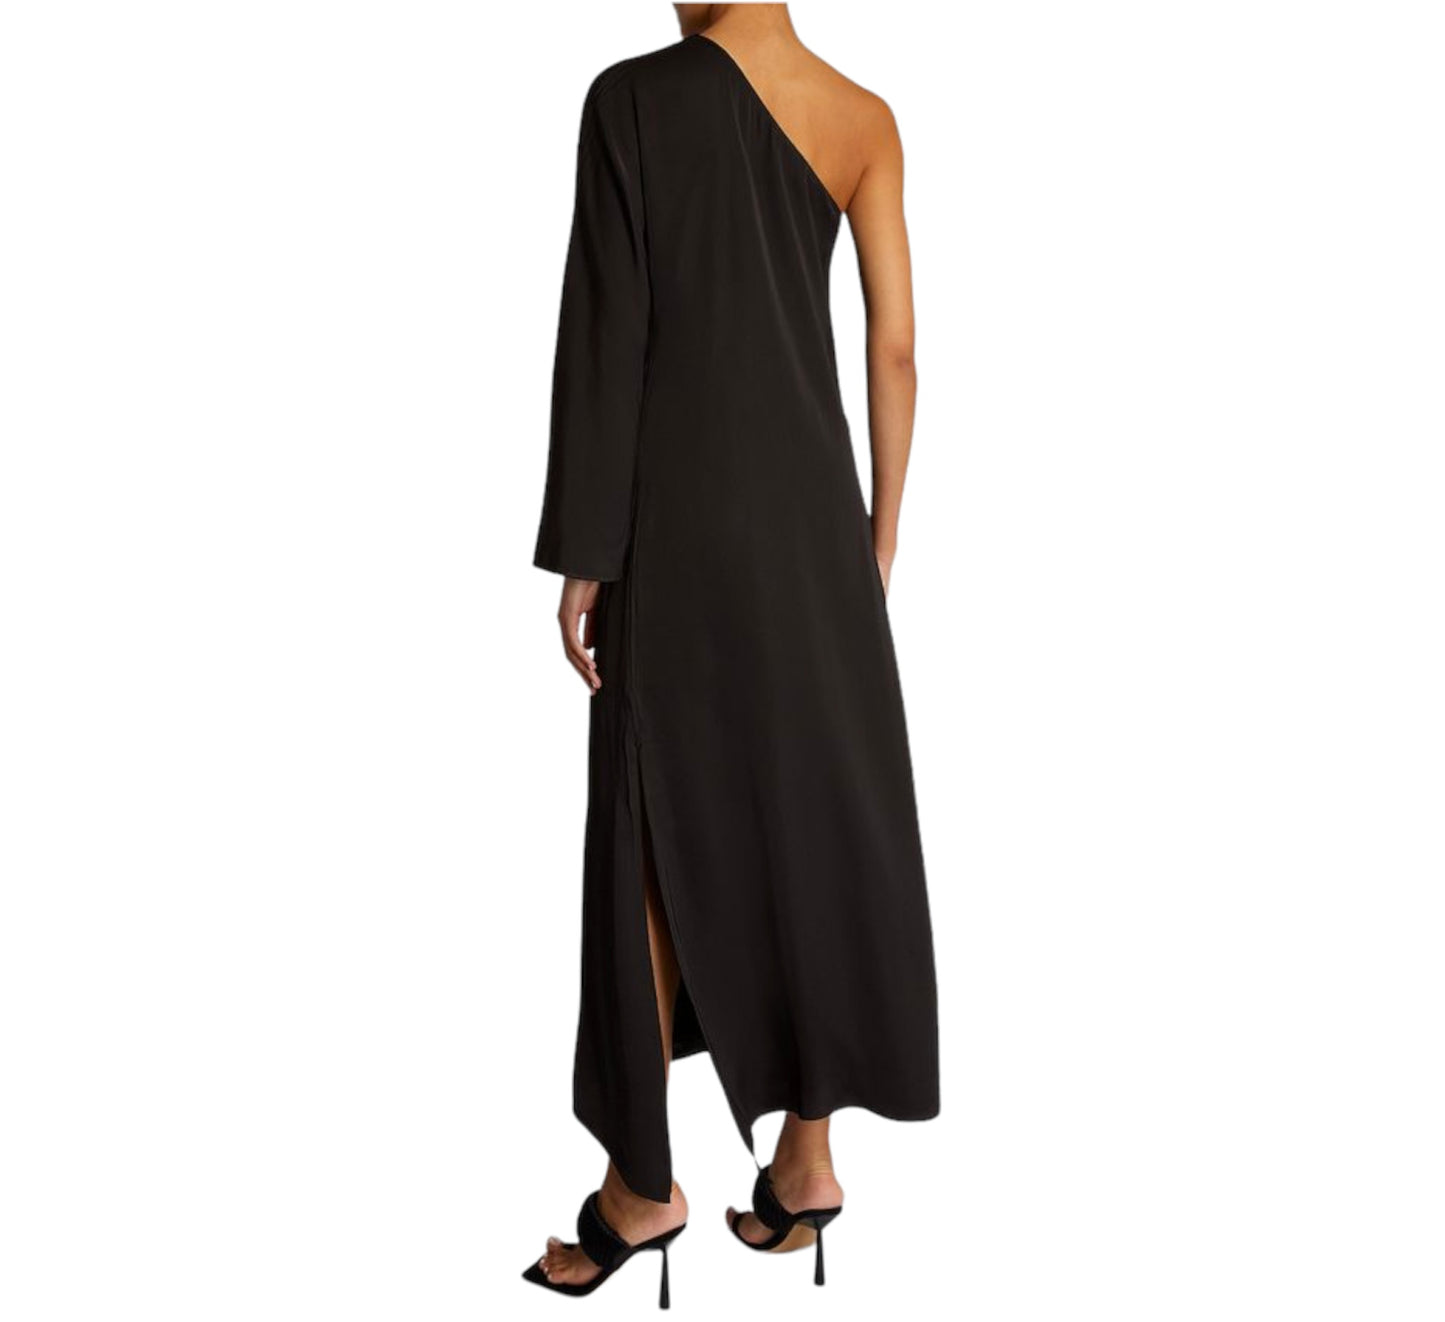 BY MALENE BIRGER One-Shoulder Maxi Dress Size 34